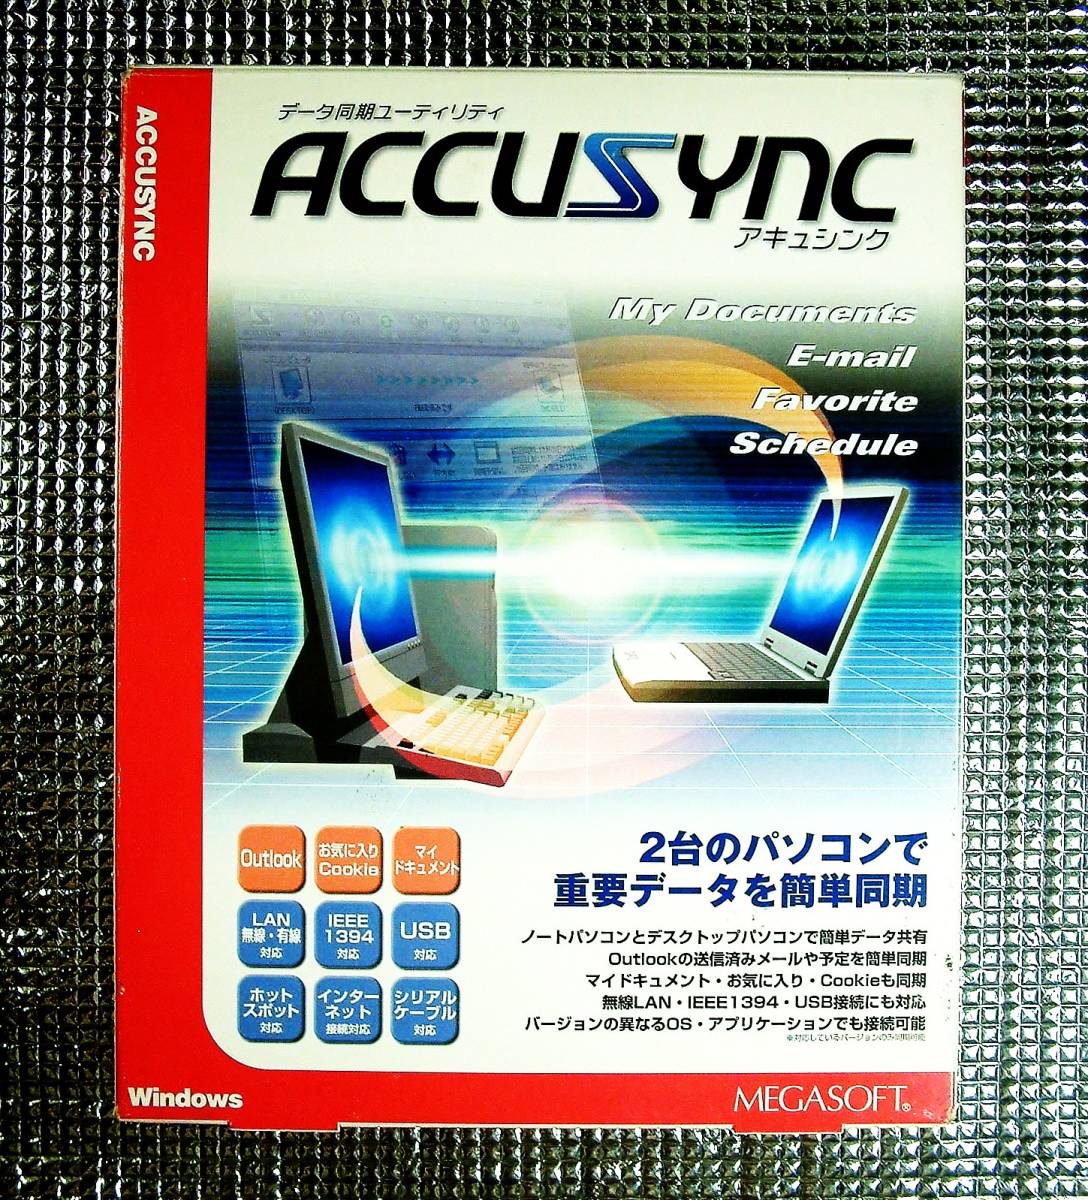 【4153】Megasoft ACCUSYNC メガソフト アキュシンク パソコン間のデータ(任意のフォルダー，Outlook，お気に入り，Cookie)を同期 PC-98も対応